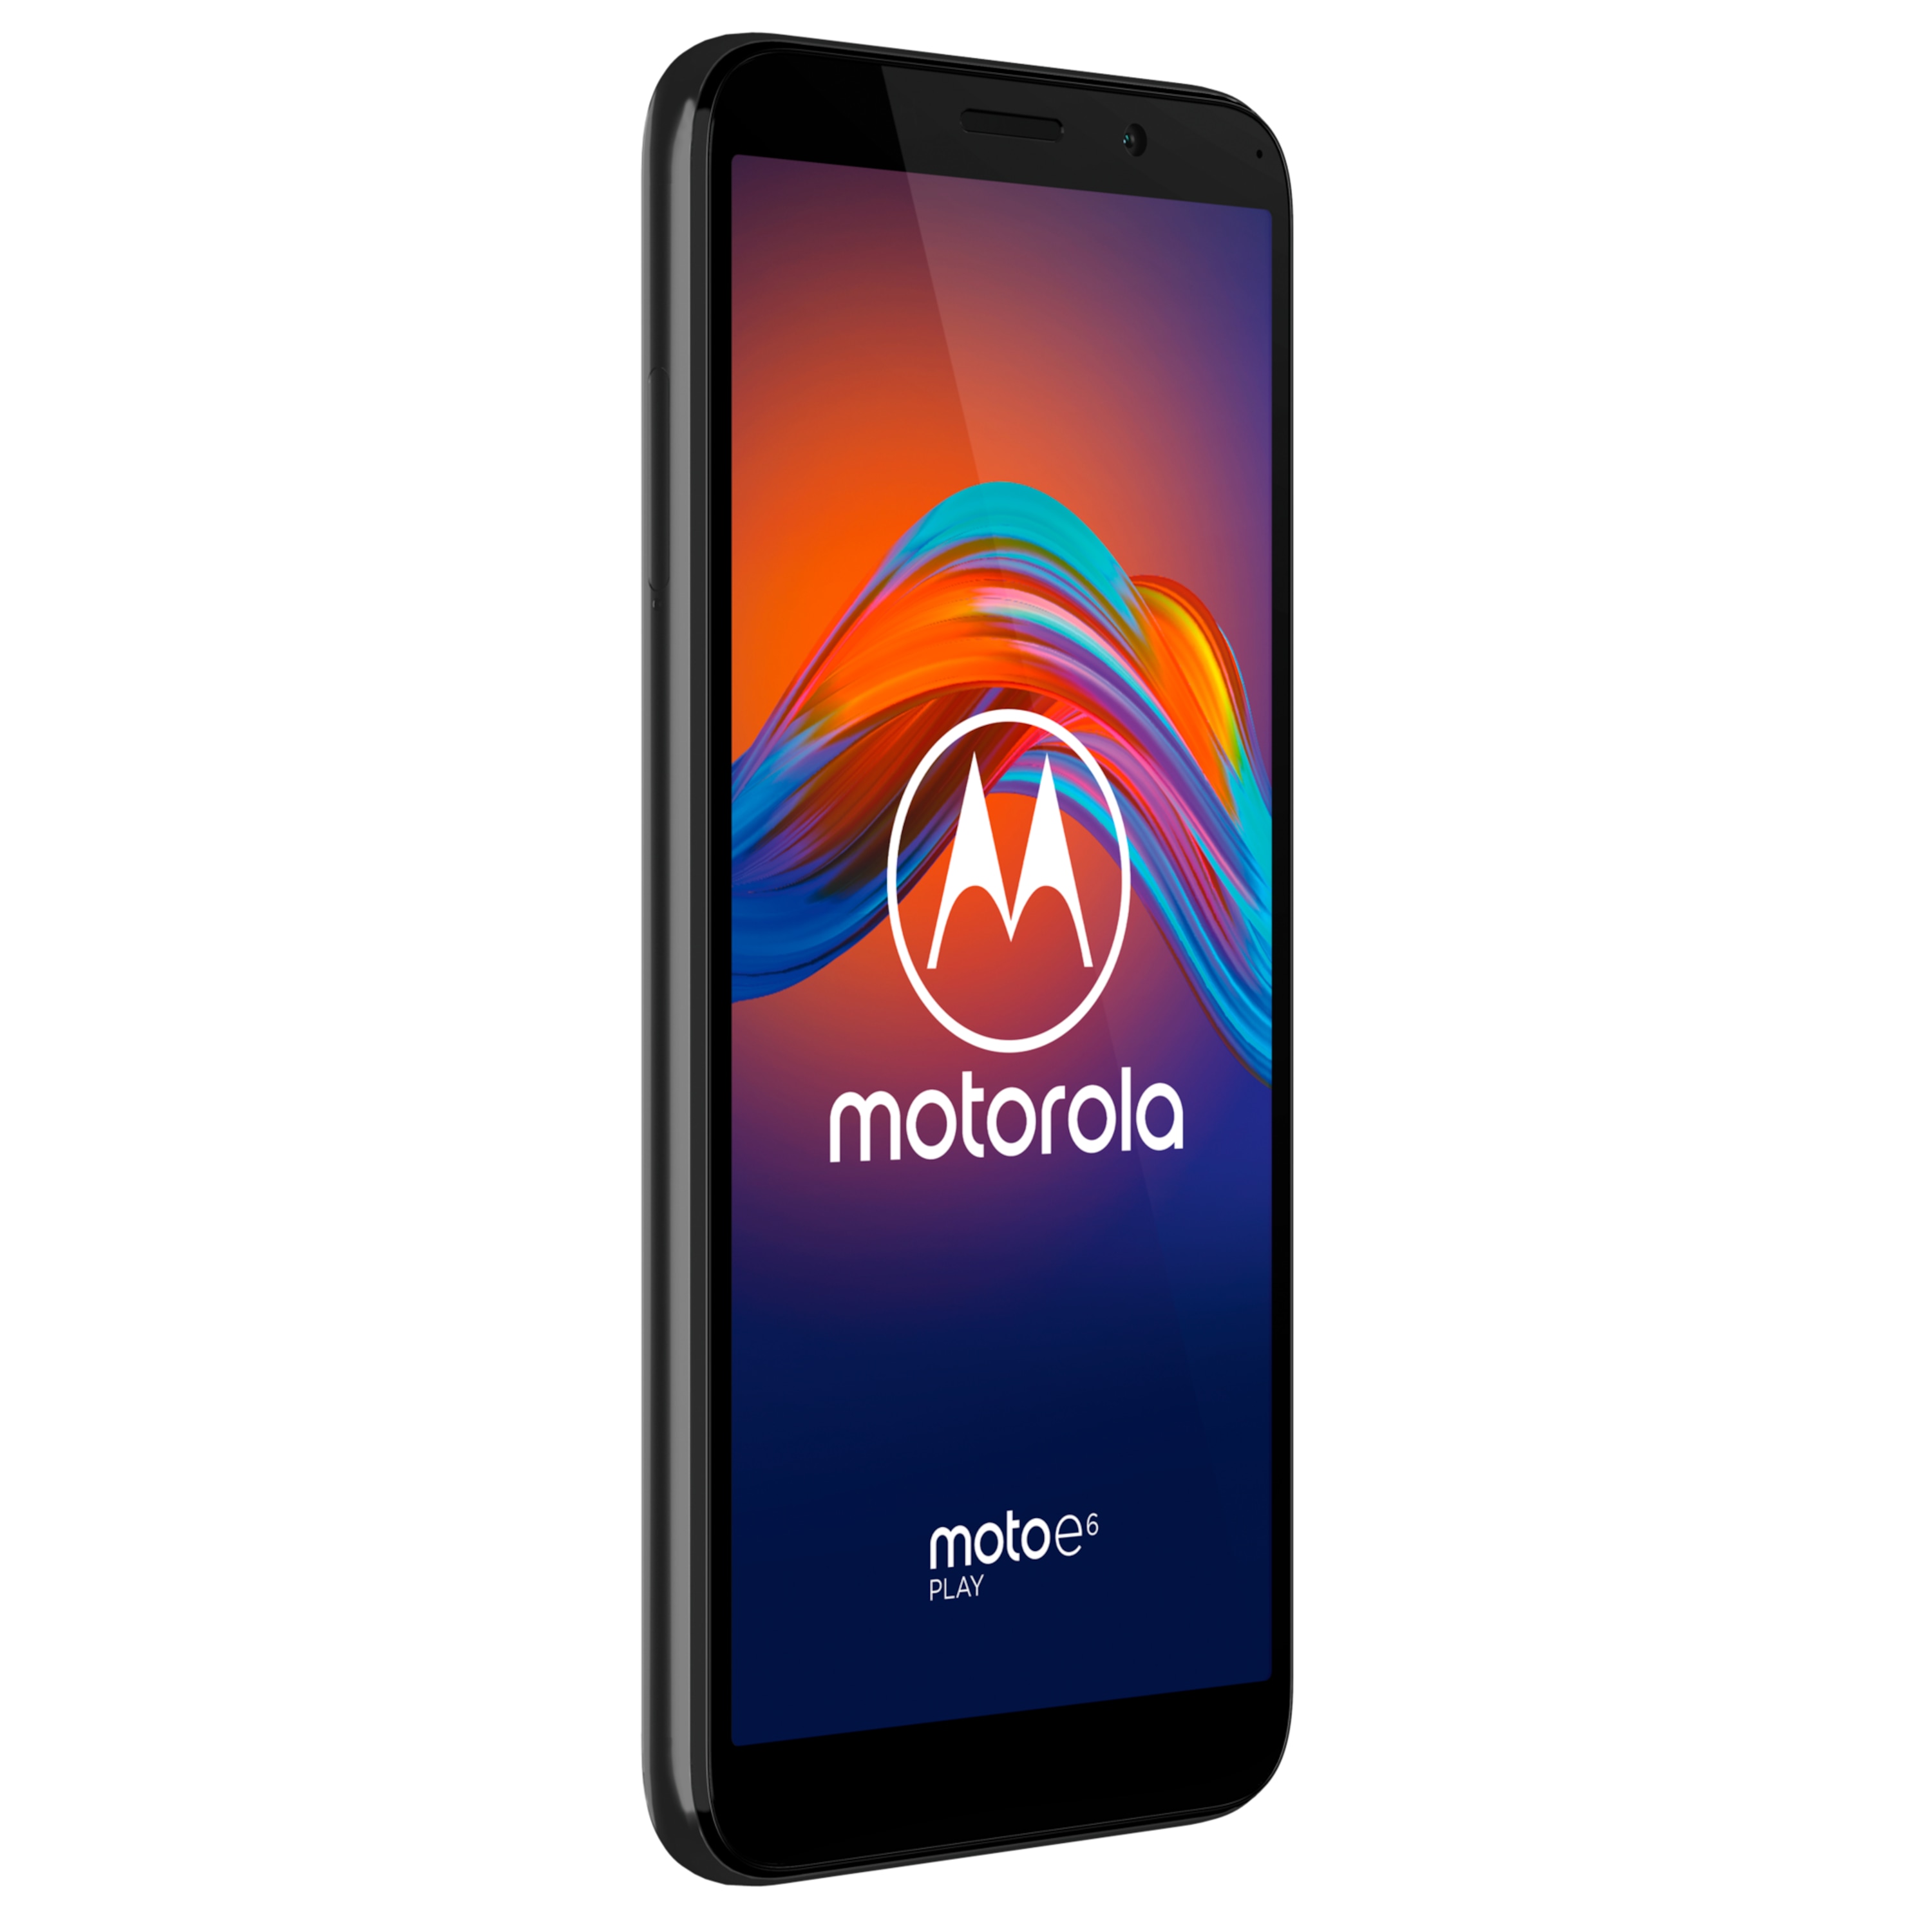 MOTOROLA  moto e6 play Smartphone, 13,97 cm (5,5") HD+ Display, Android™ 9, 32 GB Speicher, 2 GB RAM, OctaCore-Prozessor, Dual-SIM, Bluetooth® 4.2